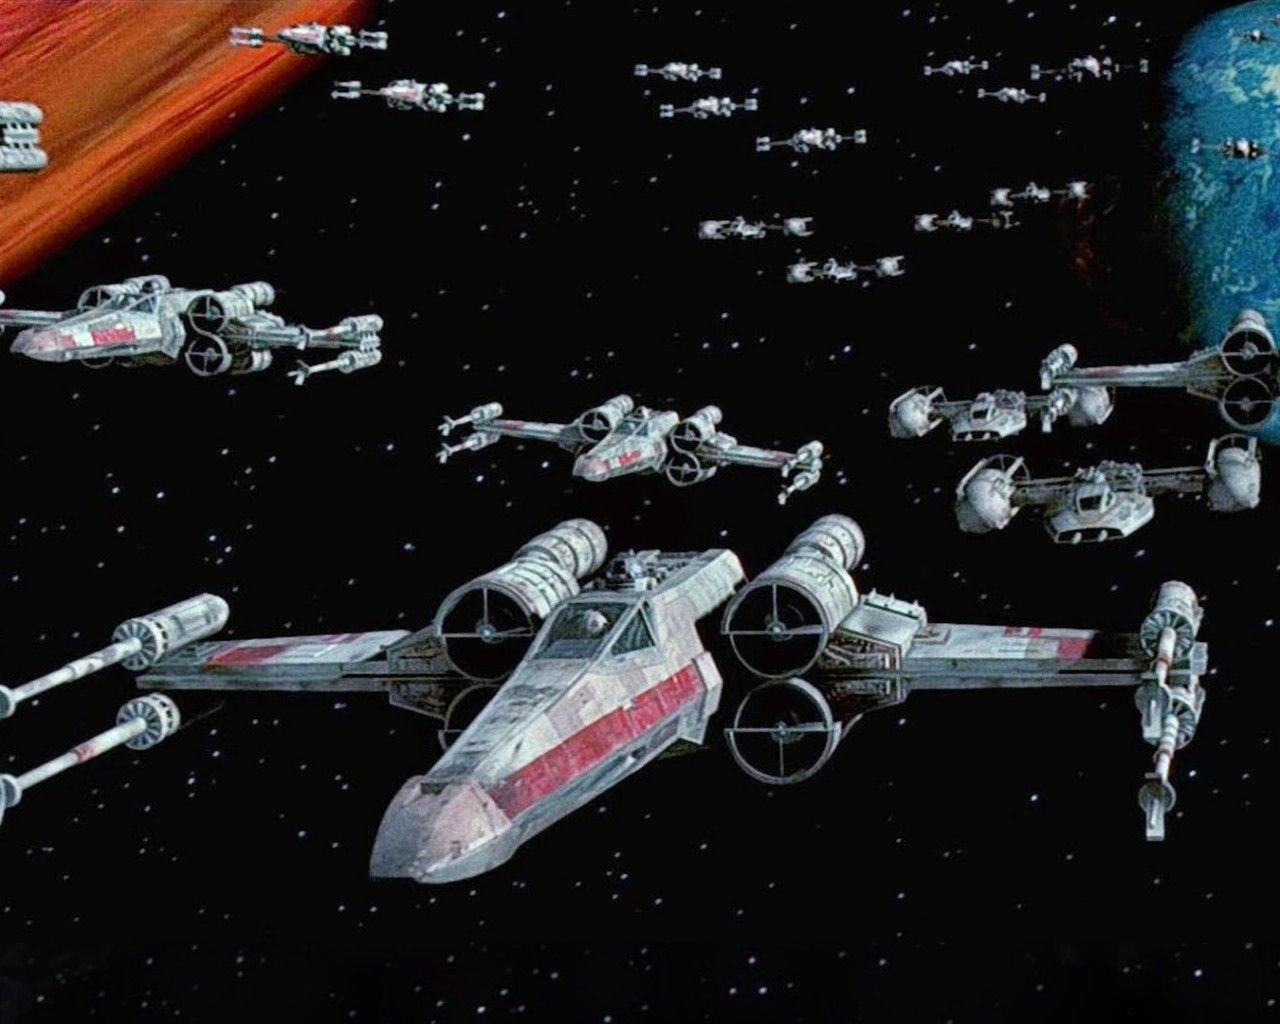 Star Wars Fleet Of Combat Aircraft With X Wings Scenarios Of Video Game Wallpaper Widescreen HD, Wallpaper13.com